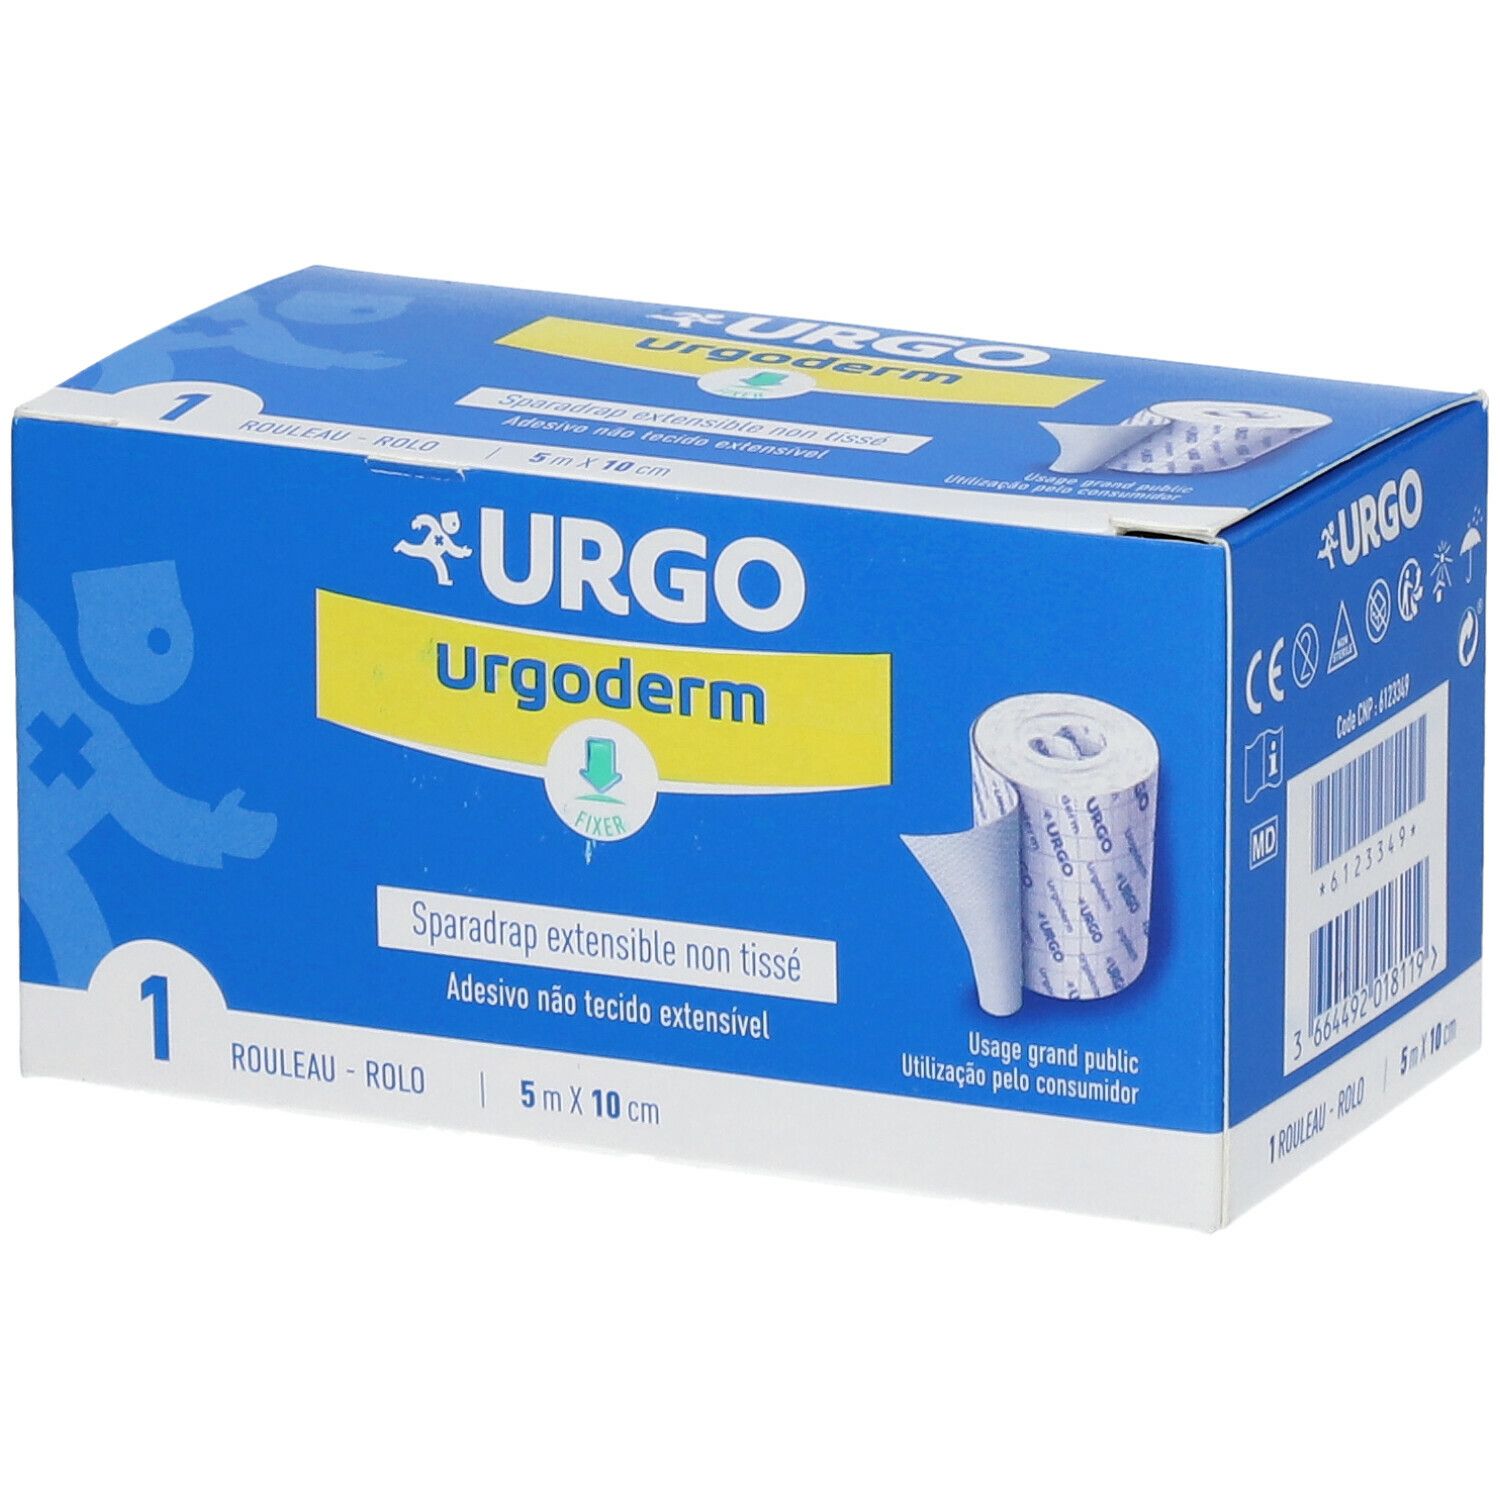 Urgo Urgoderm Sparadrap non tissé extensible 5 m x 10 cm